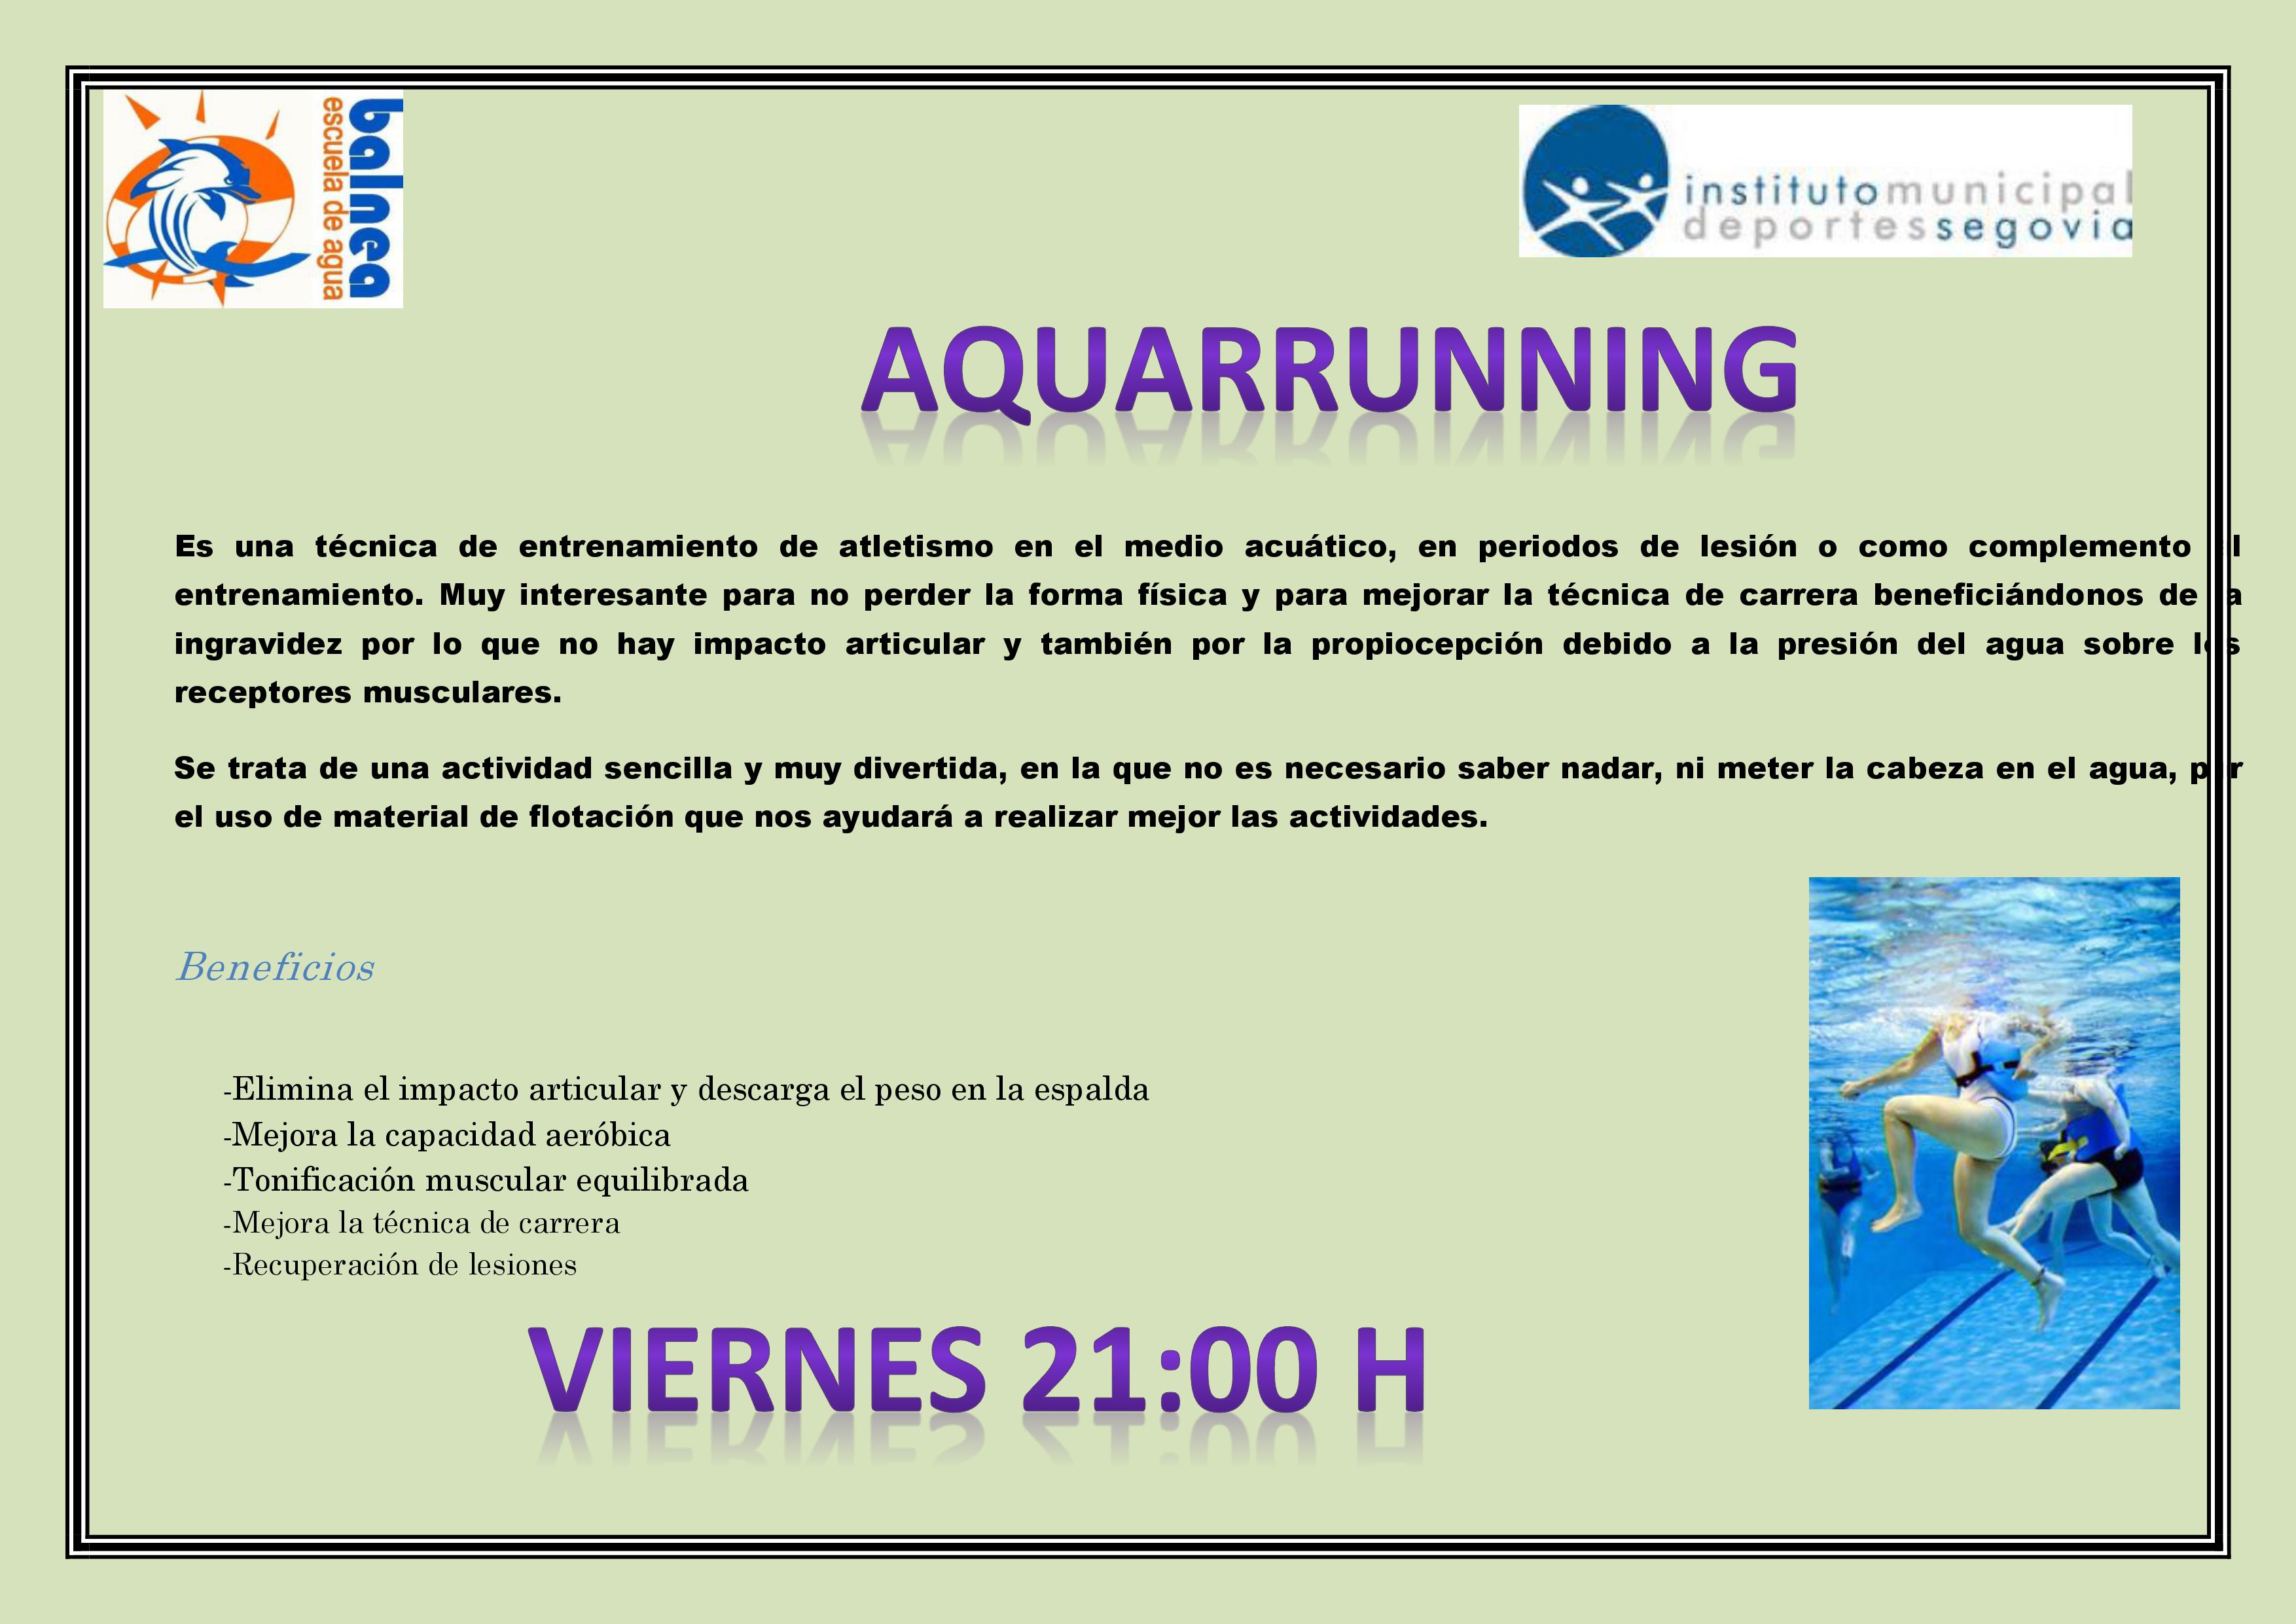 Aquarrunning en la Piscina Climatizada “José Carlos Casado”